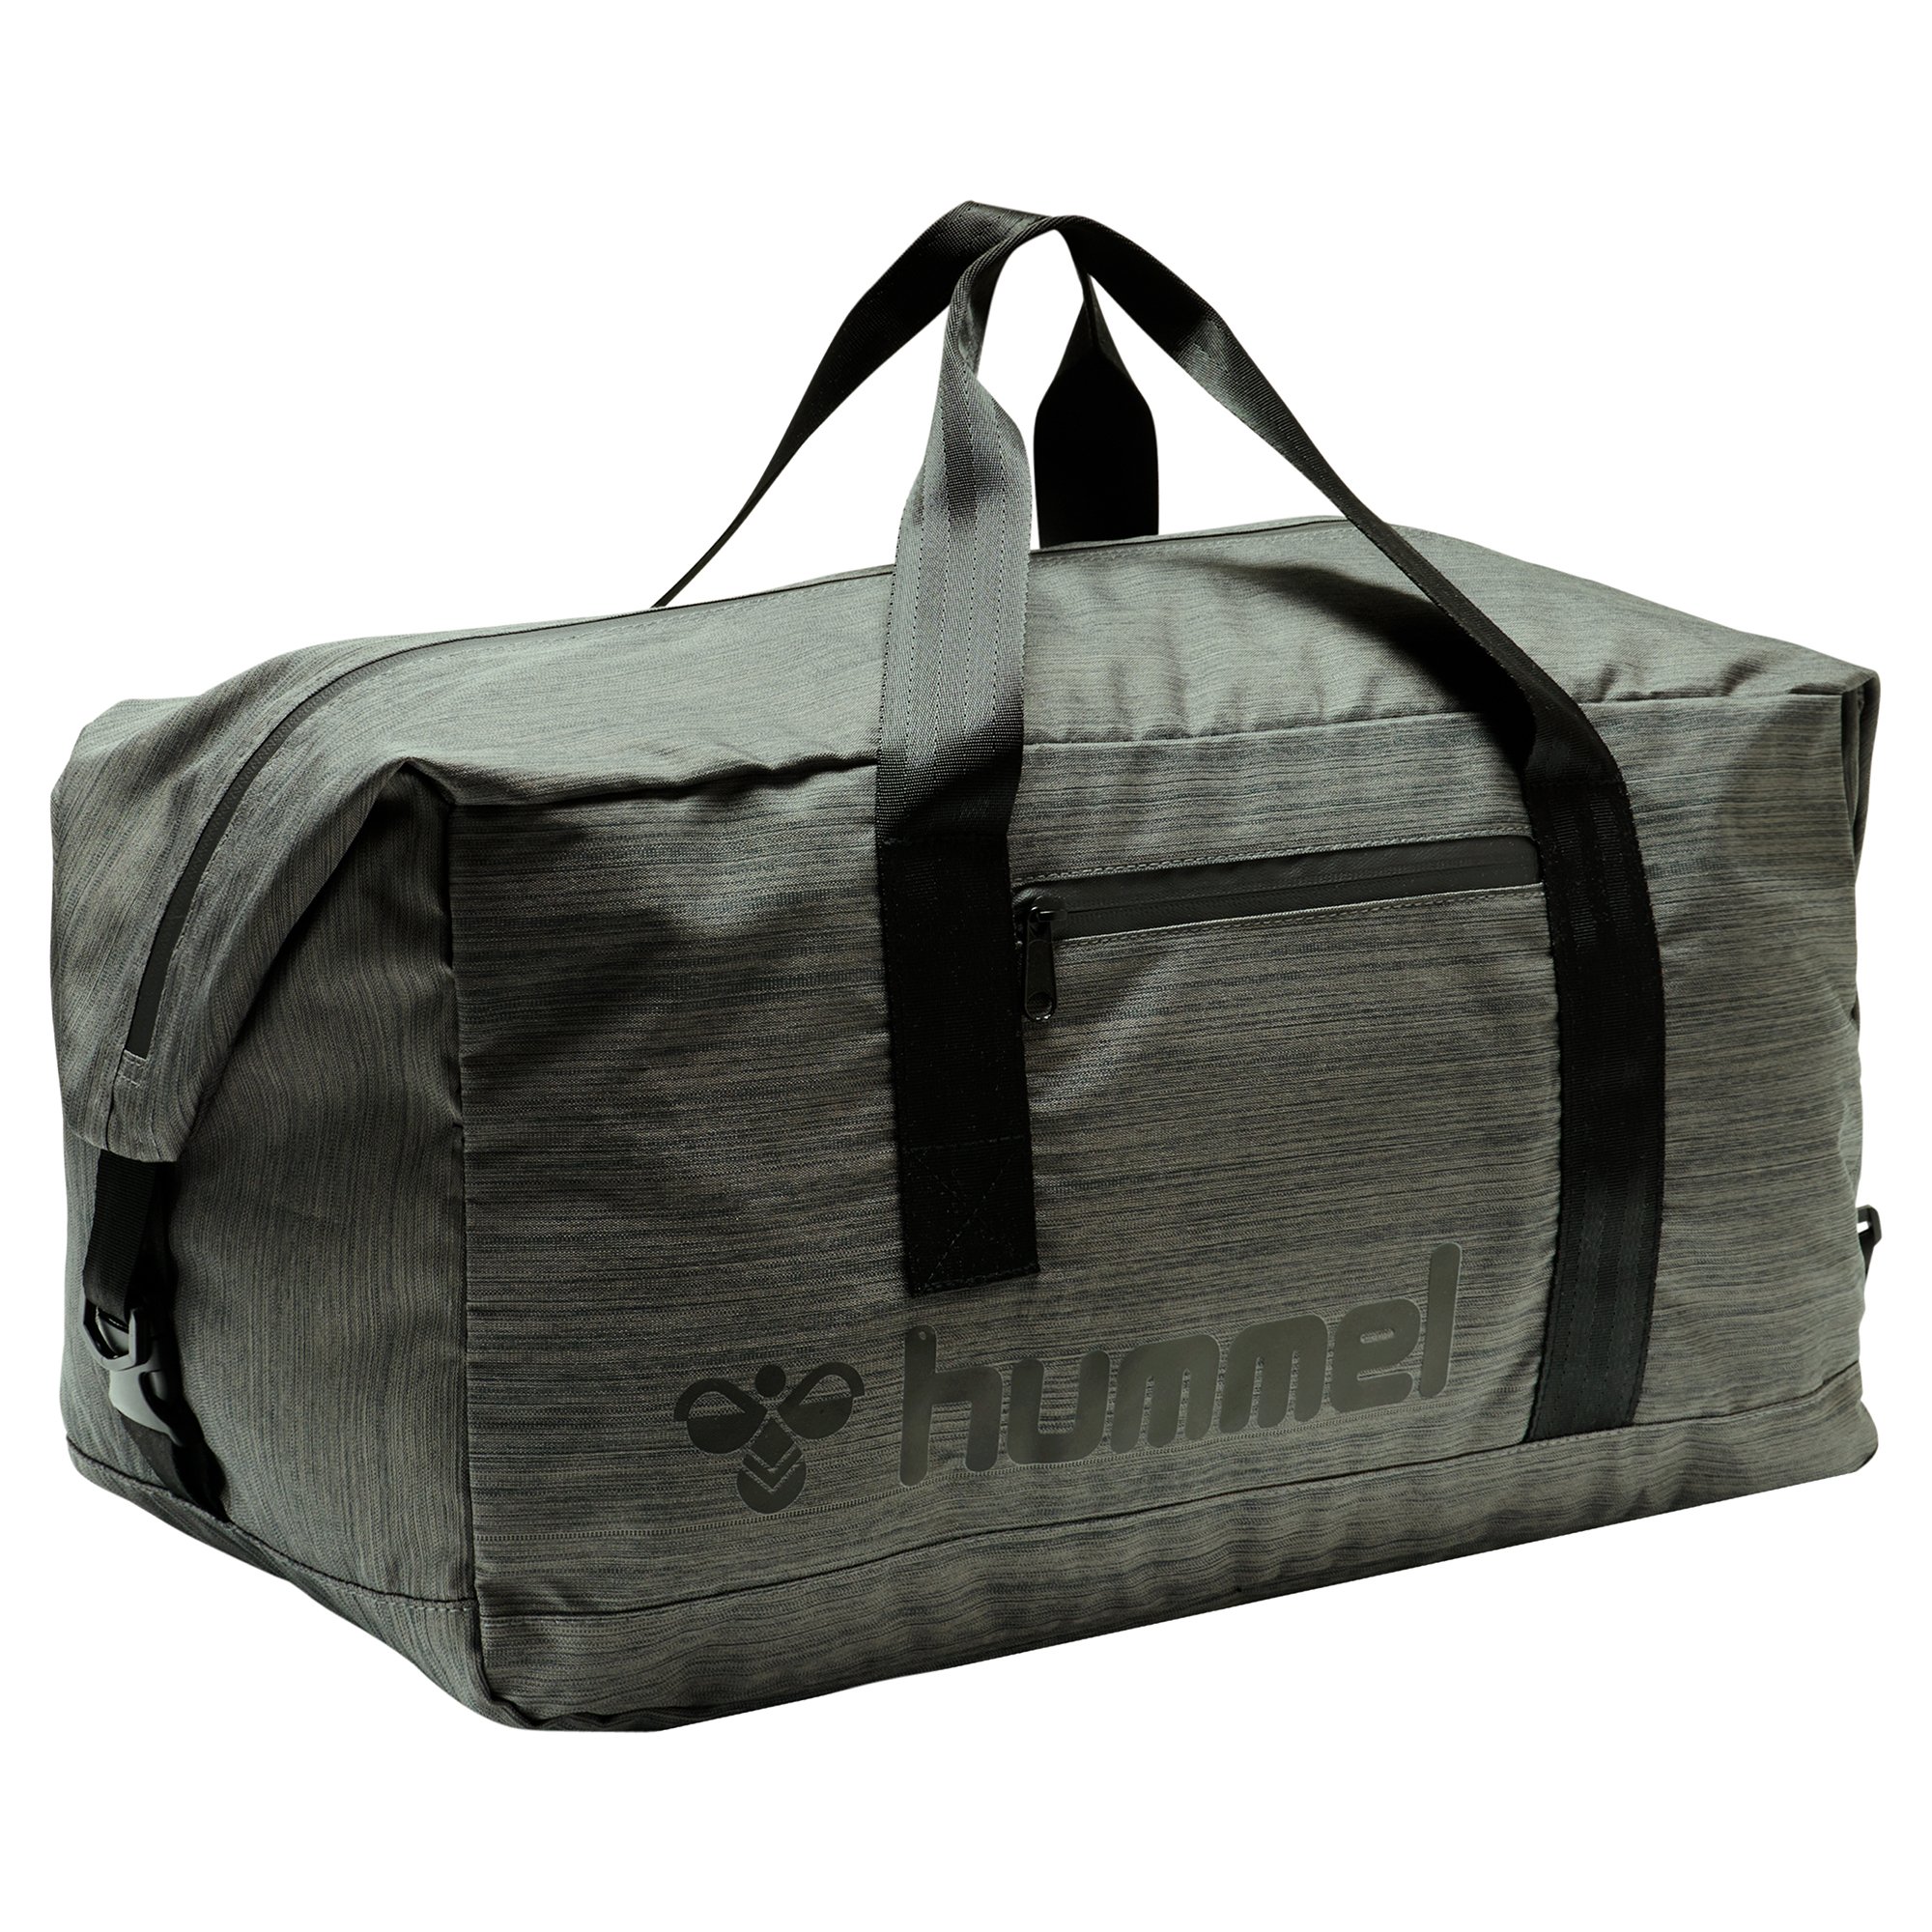 Hummel Urban Duffel Bag